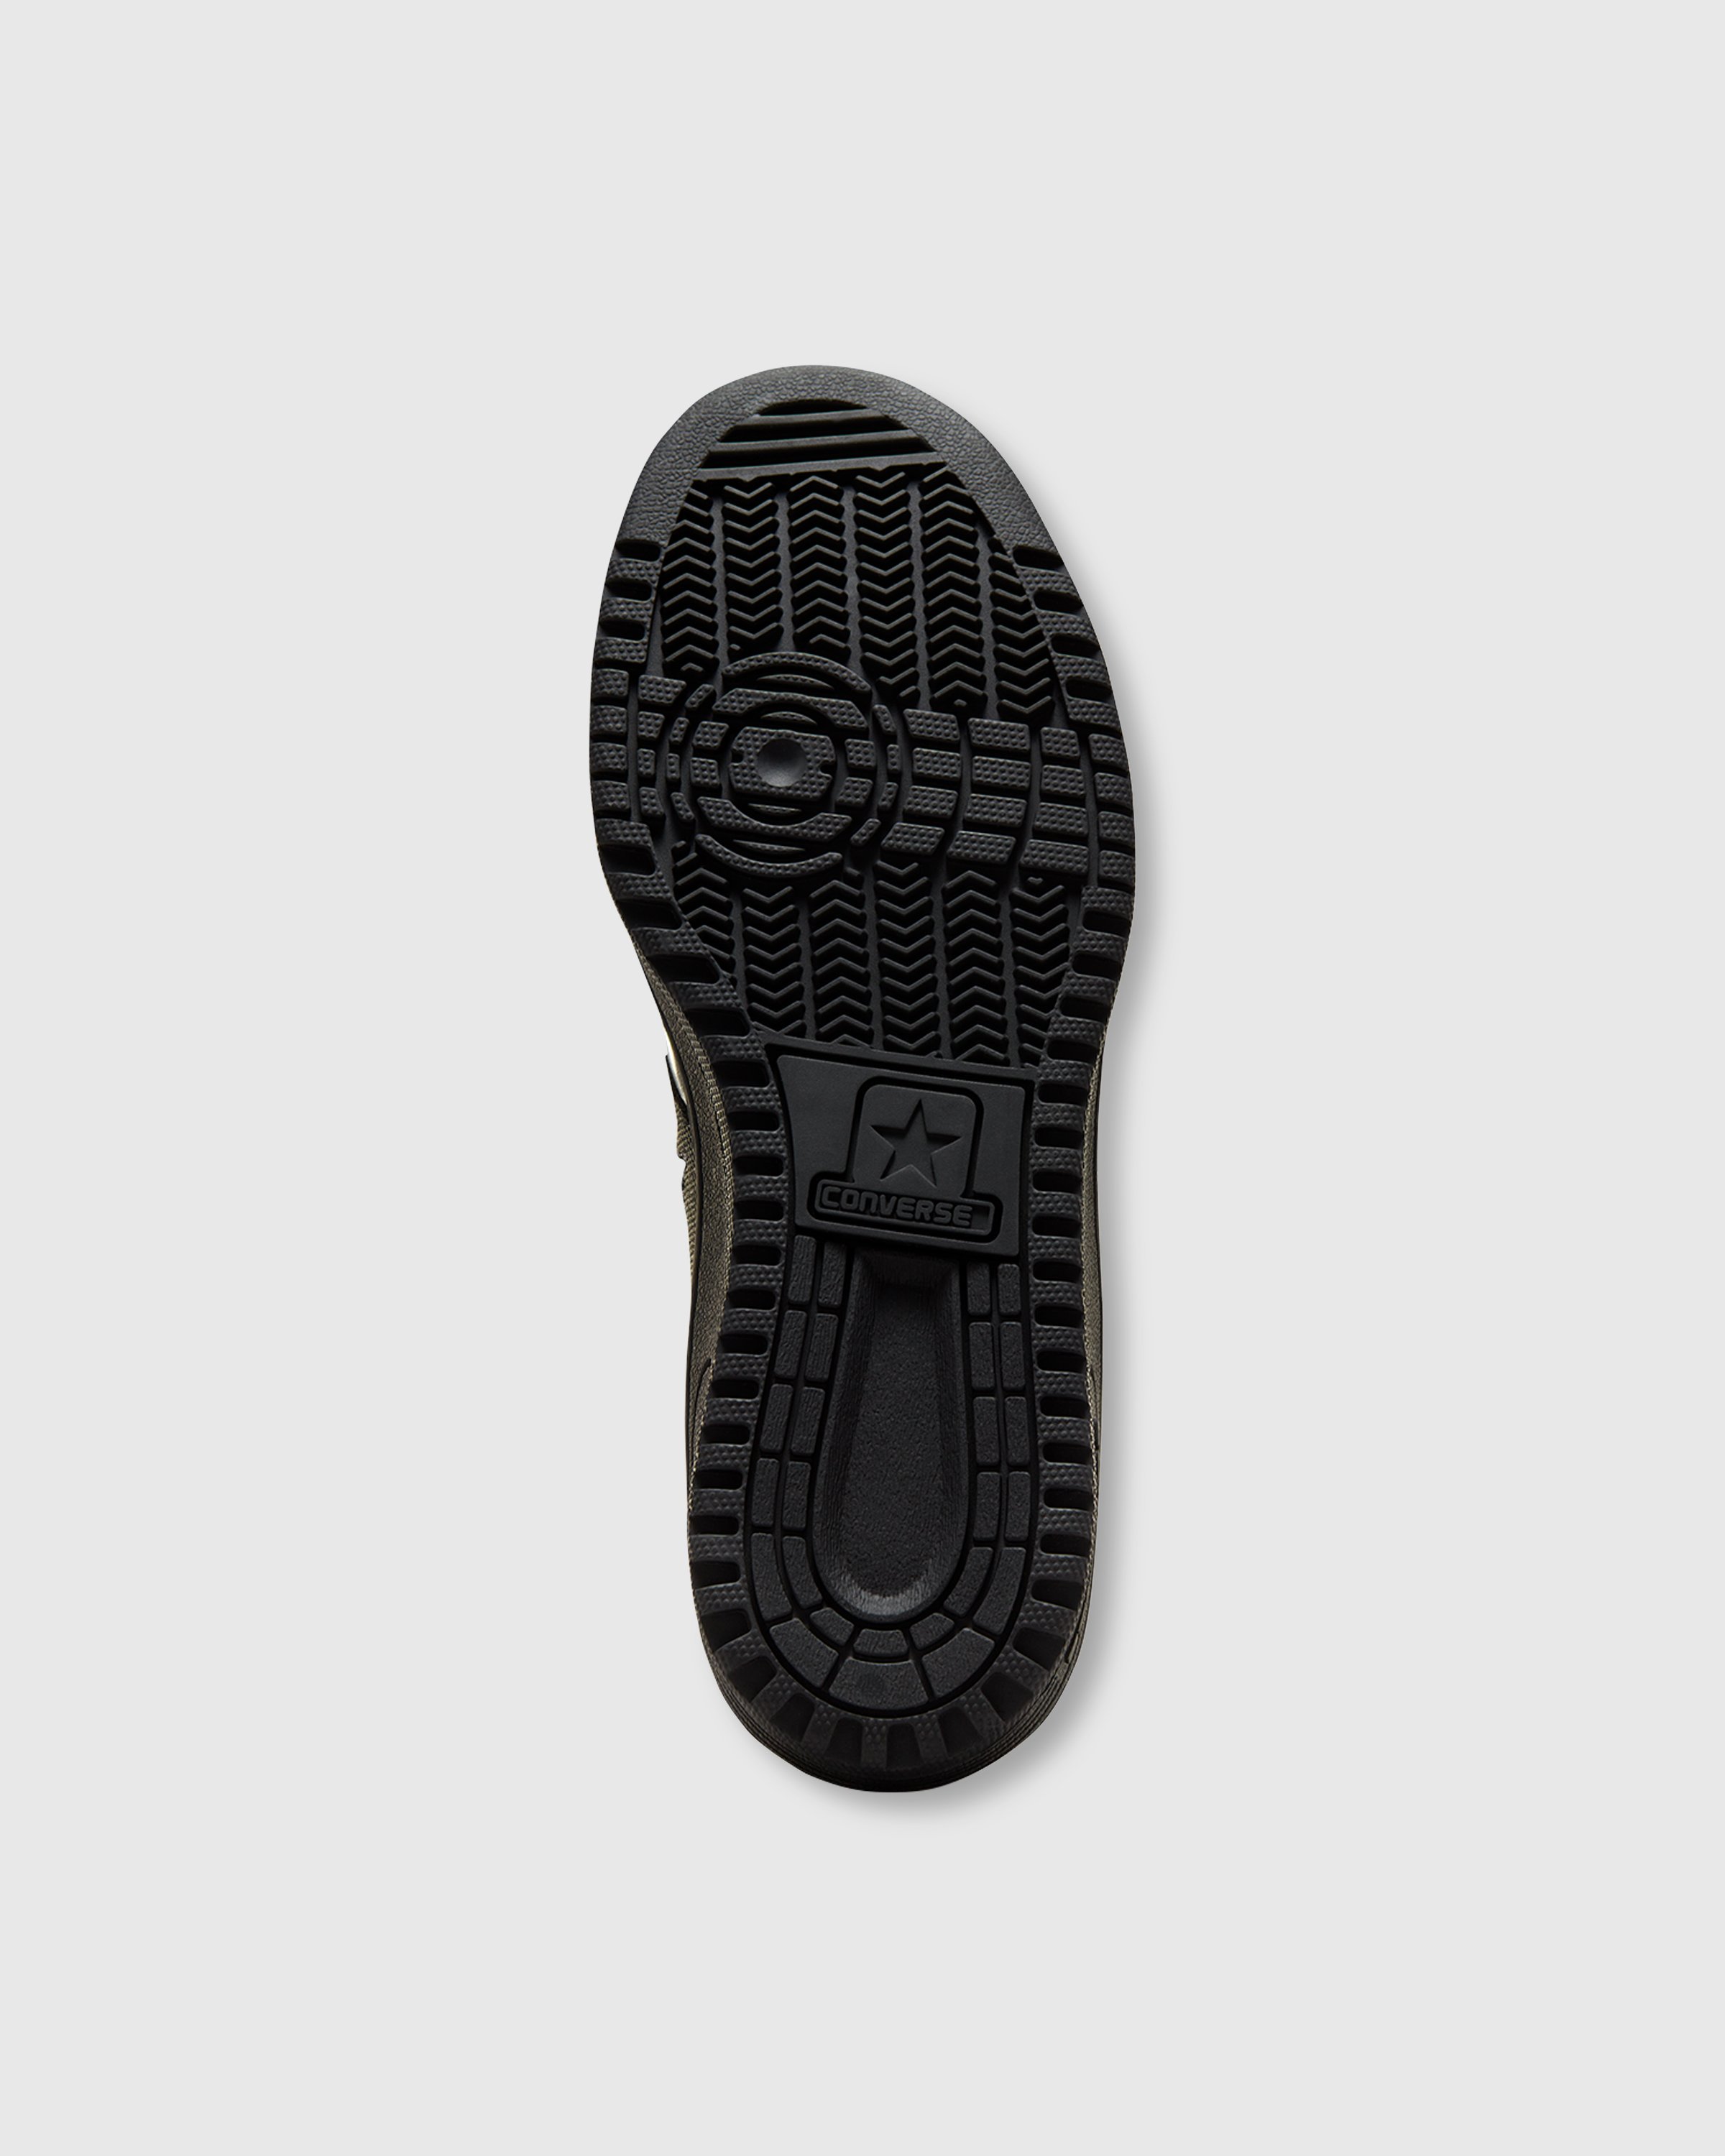 Converse x Patta - WEAPON OX BLACK/GRAY/MULTI - Footwear - Black - Image 4